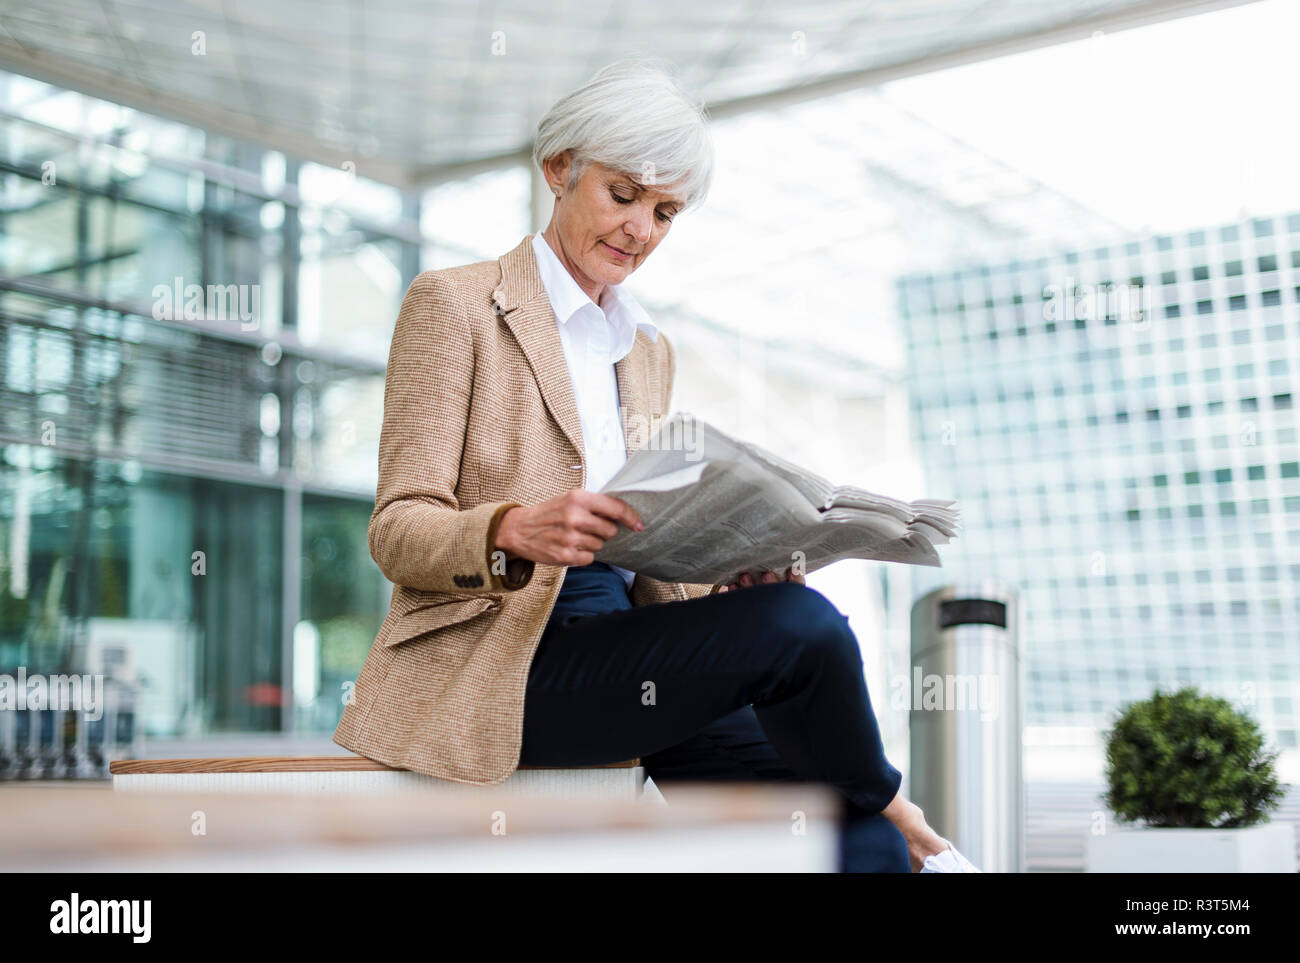 Senior businesswoman sitting in the city reading newspaper Stock Photo